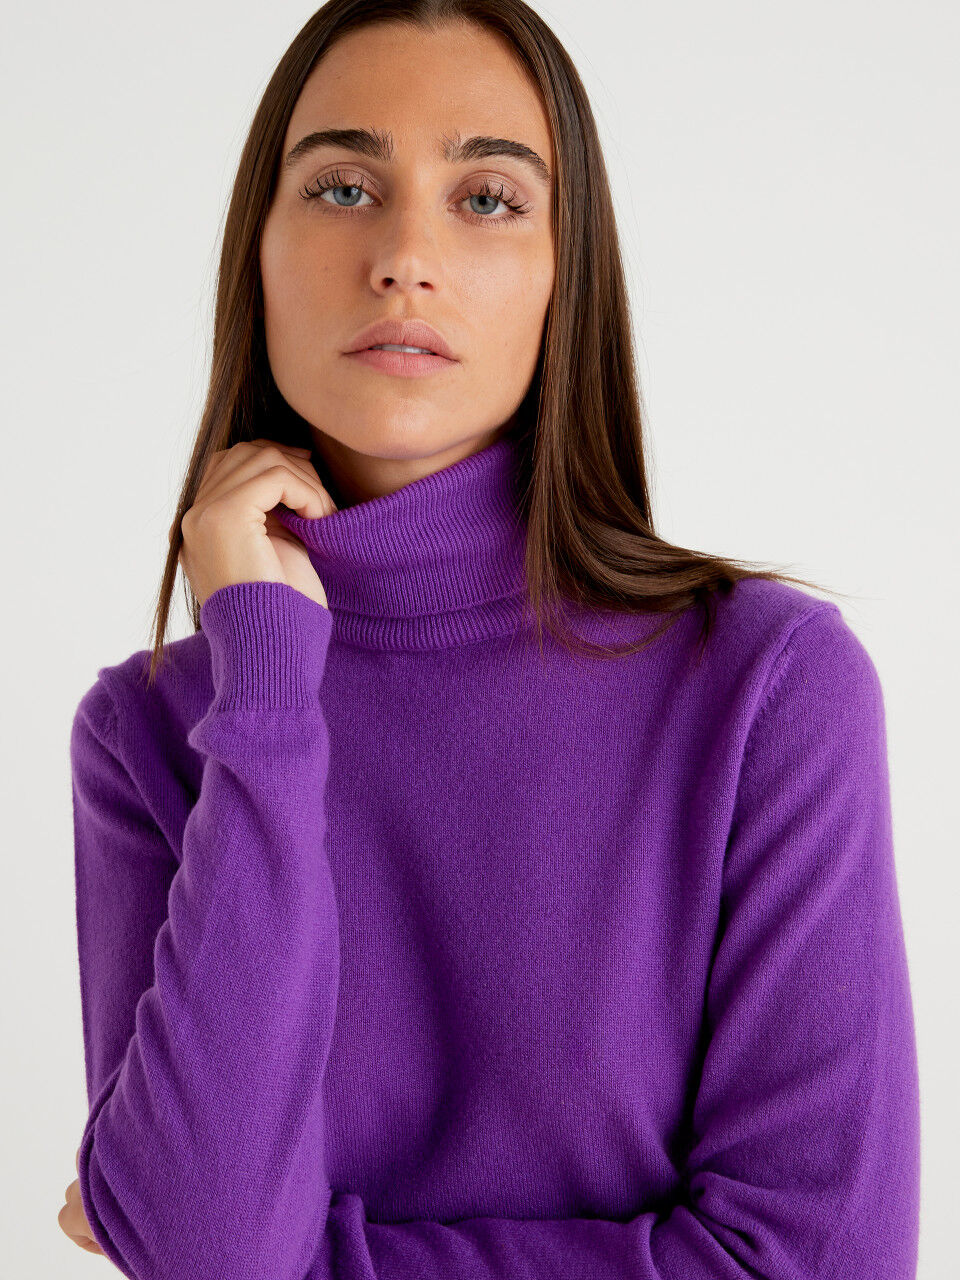 discount 80% Gray/Purple S WOMEN FASHION Jumpers & Sweatshirts NO STYLE Springfield jumper 